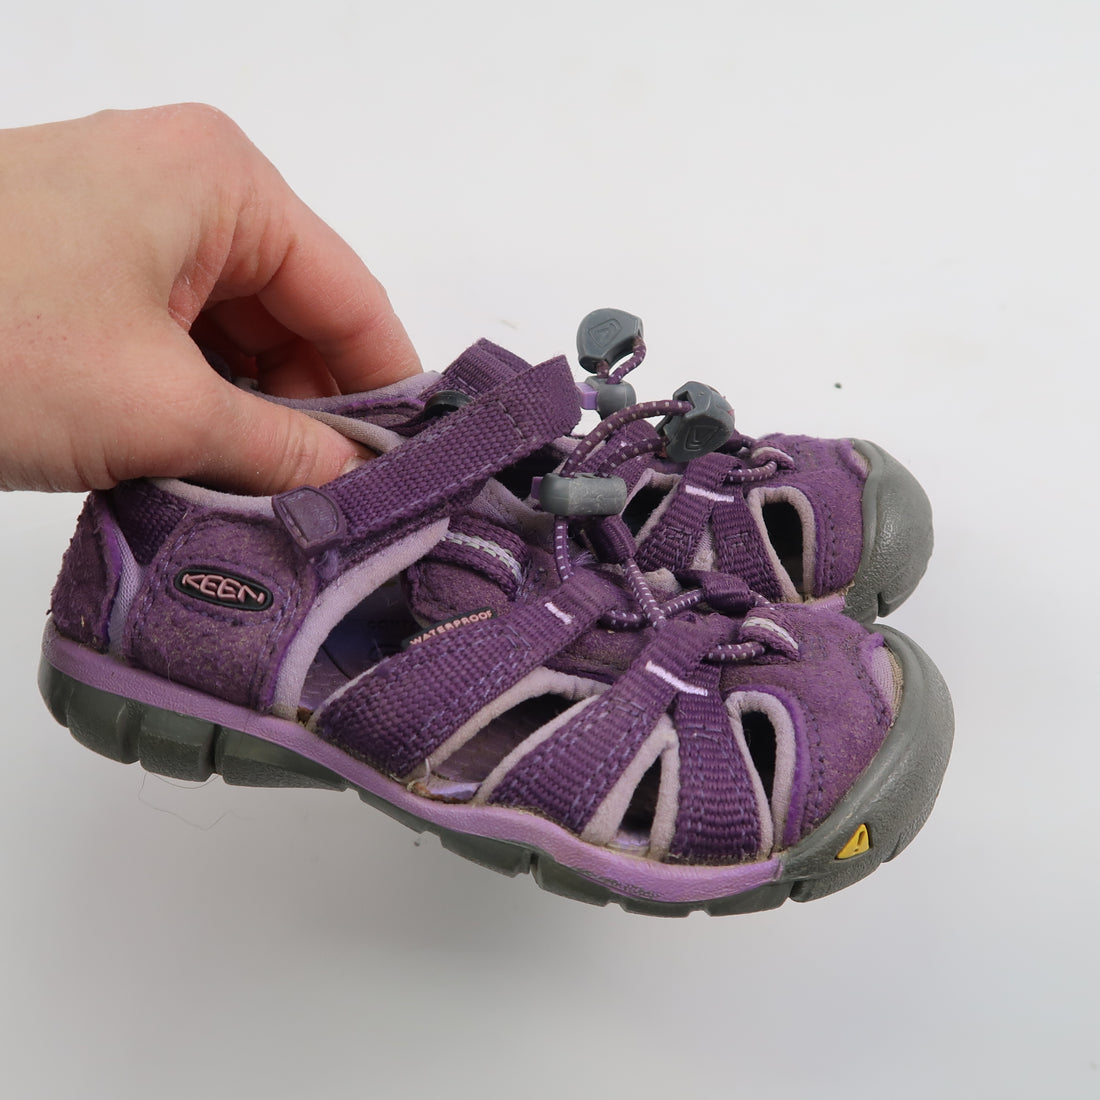 Keen - Sandals (Shoes - 8)